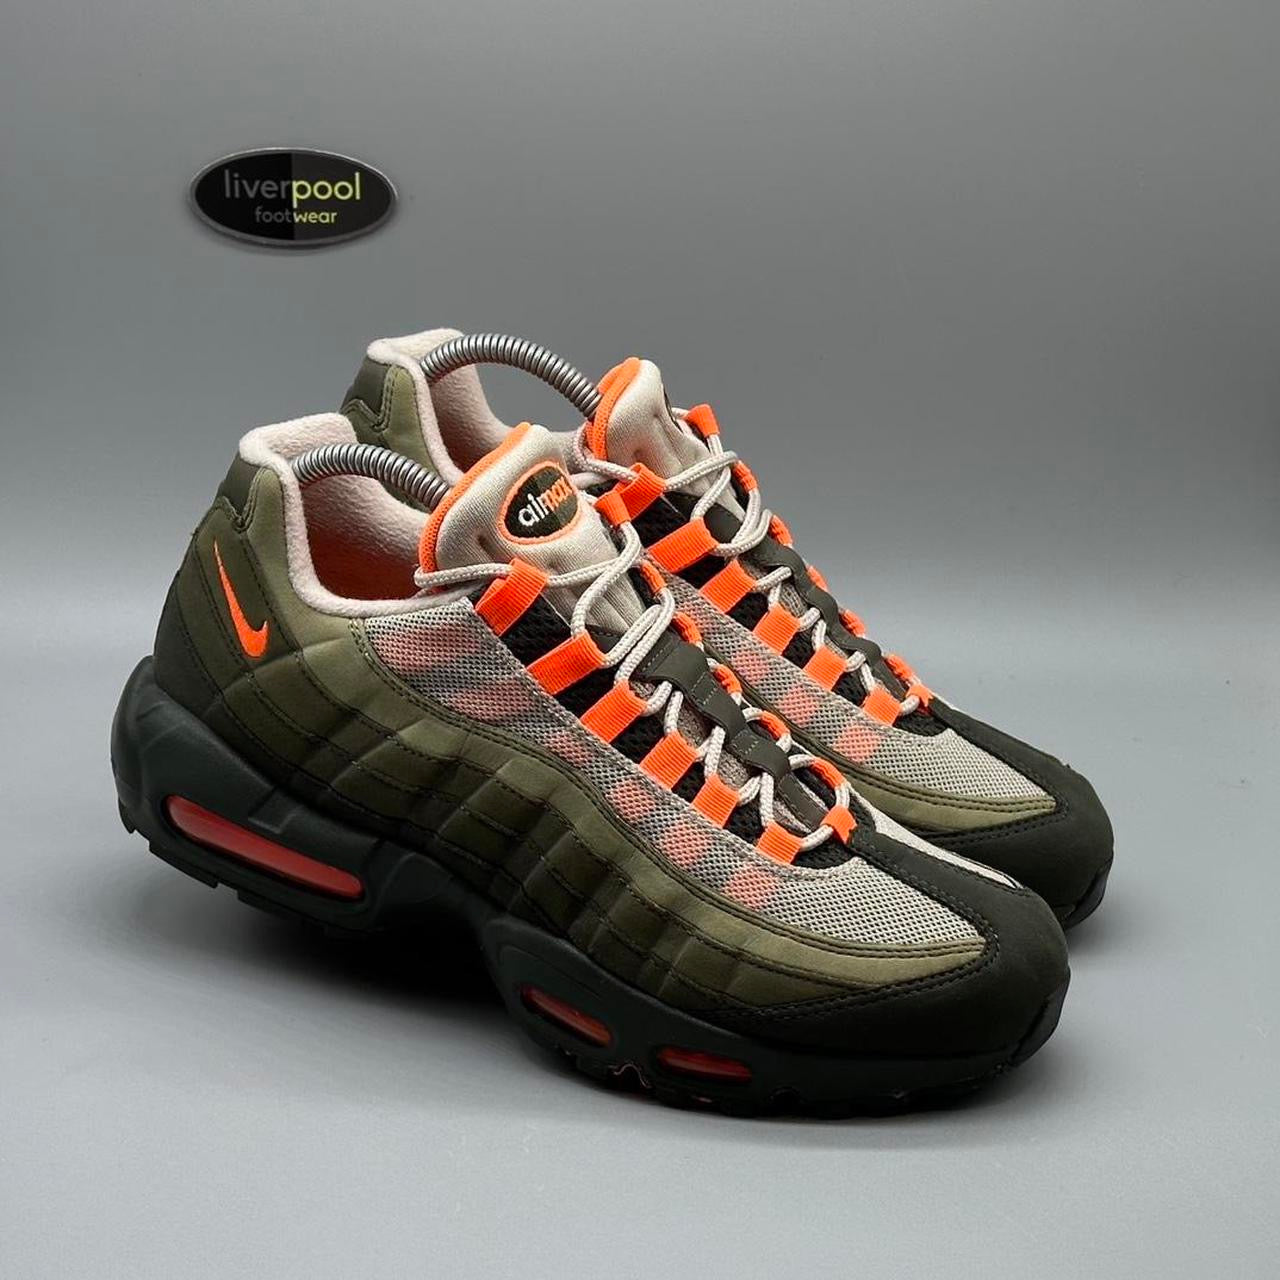 Nike Air Max 95 - Olive / Safety orange